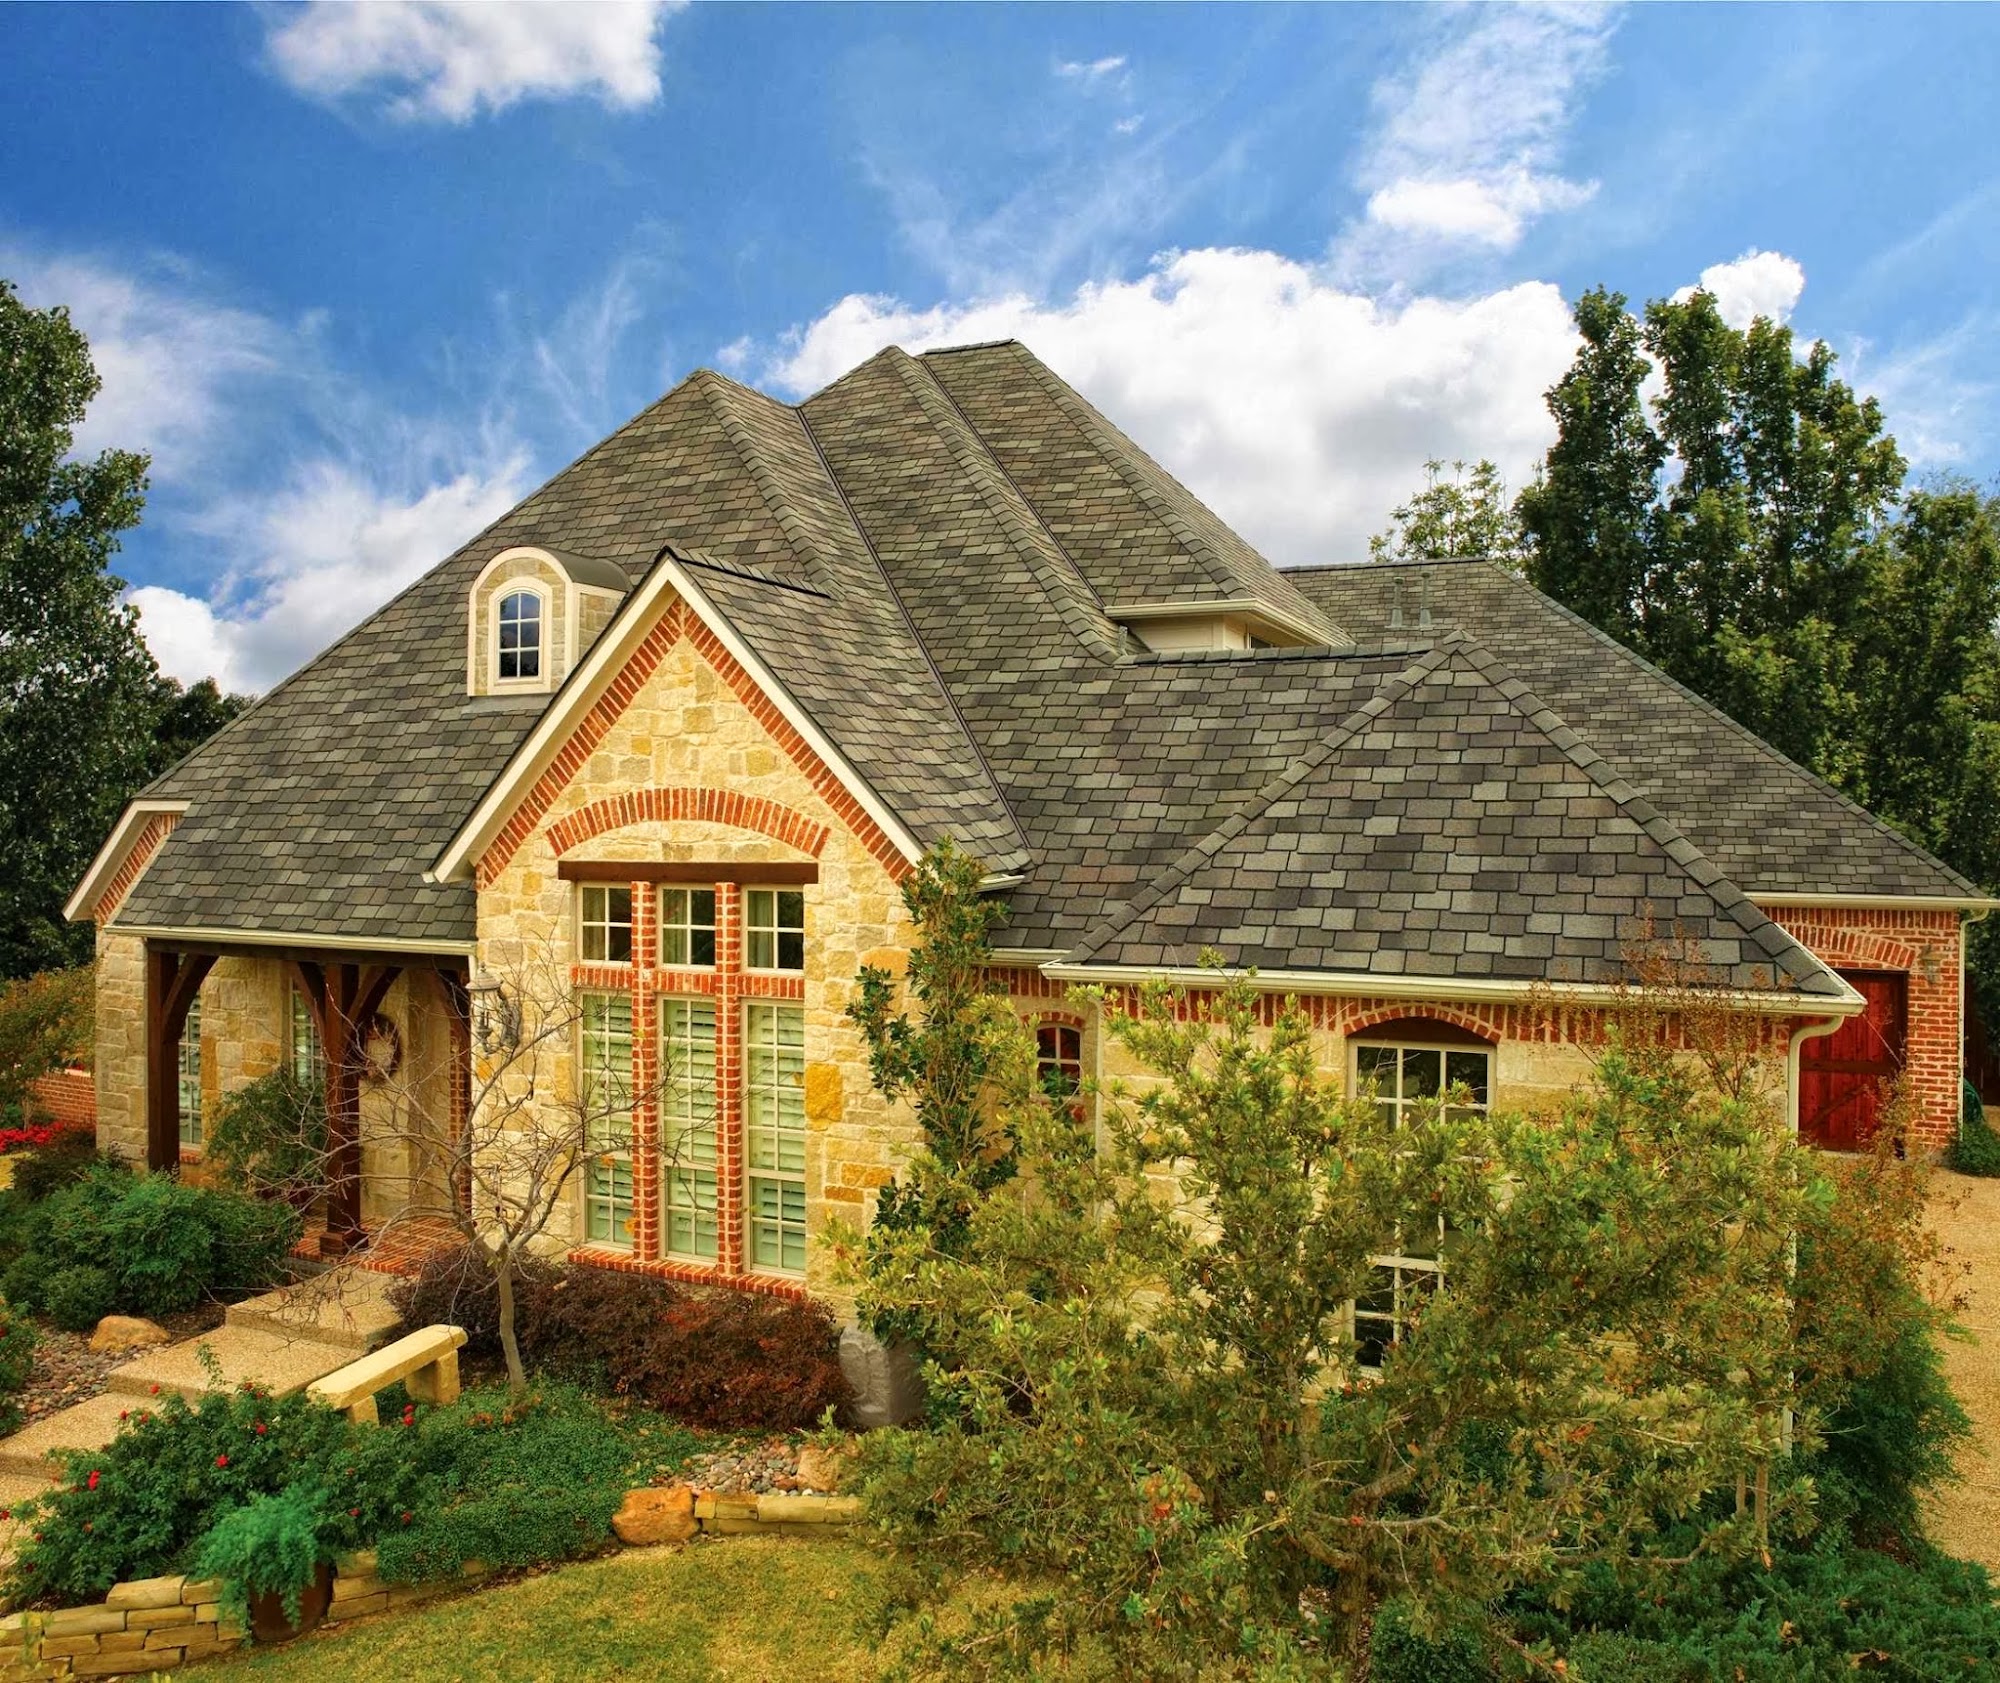 K & P Roofing, Siding & Home Improvement, Inc.